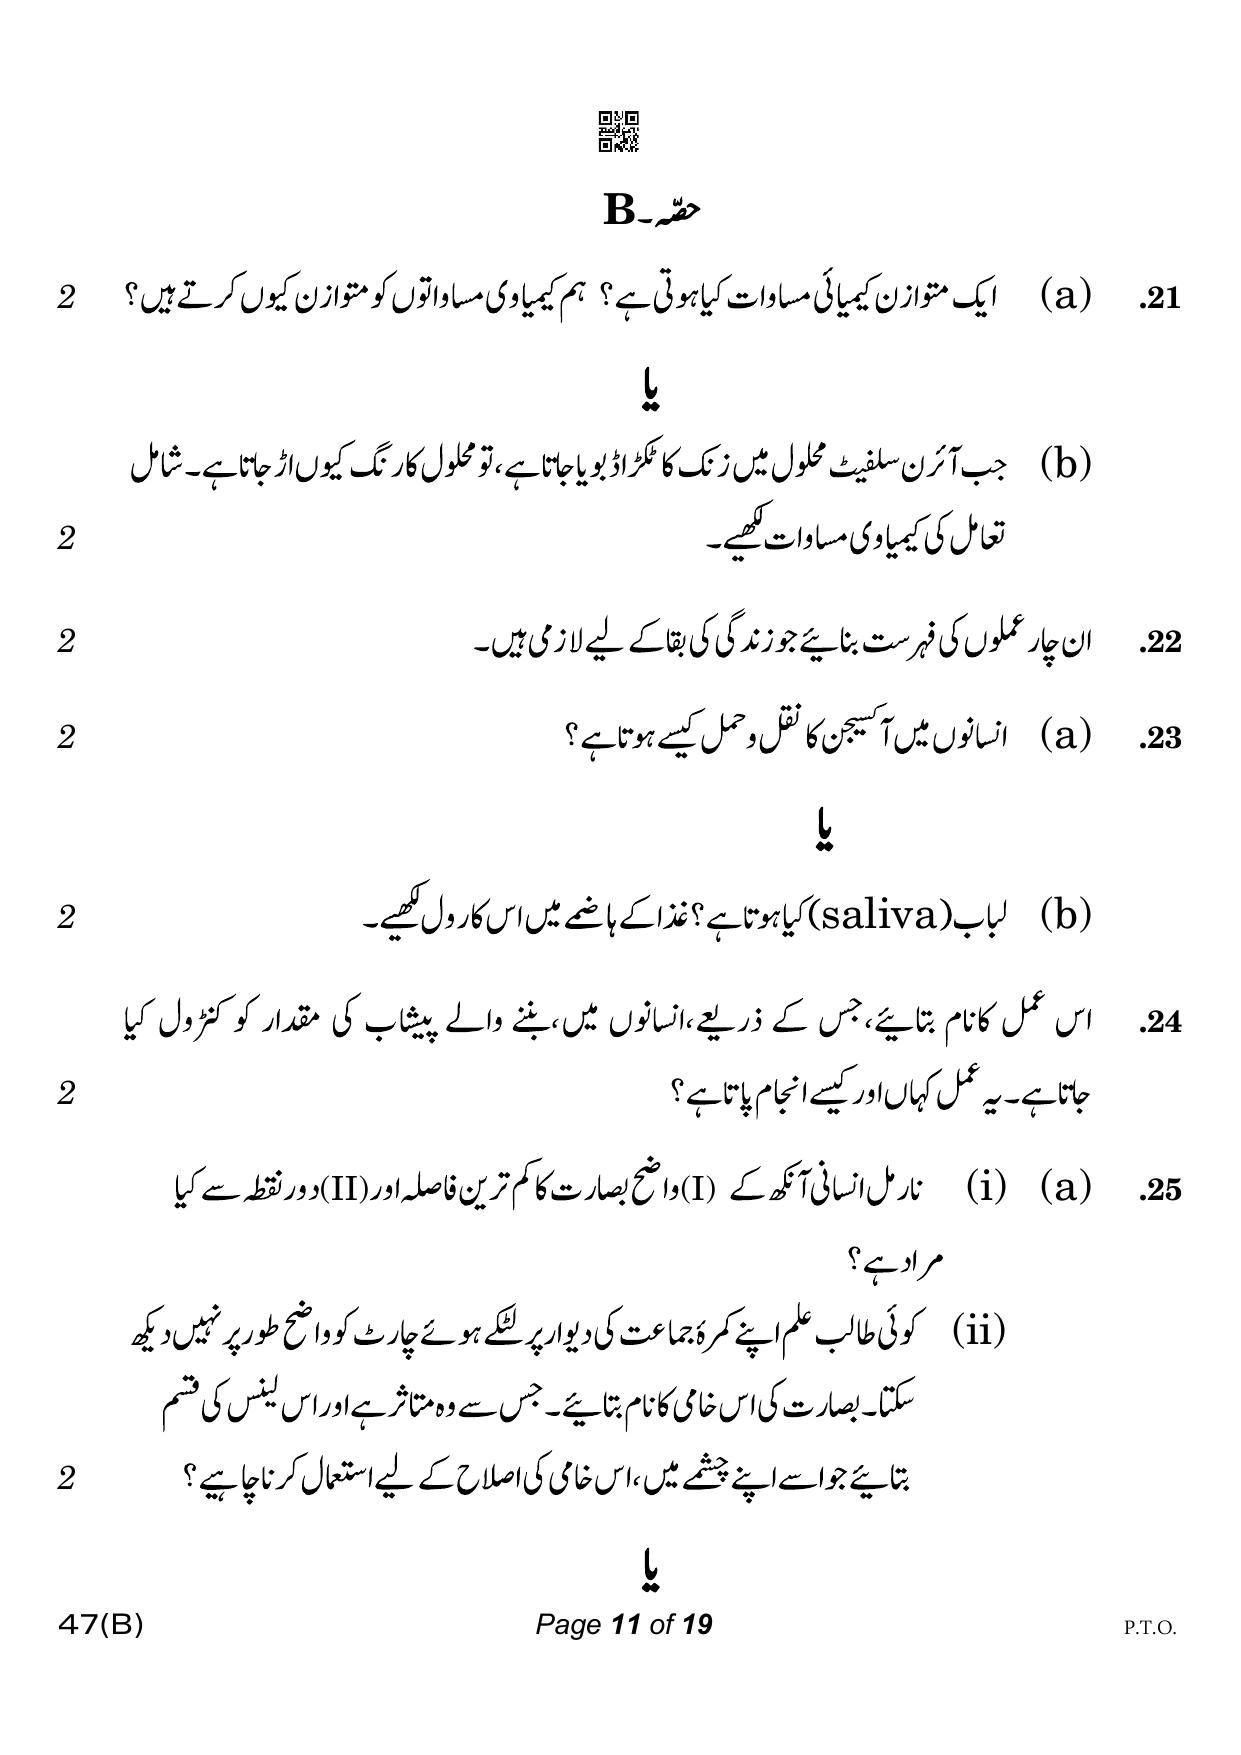 CBSE Class 10 47-B-5 Science for VI Urdu Version 2023 Question Paper - Page 11